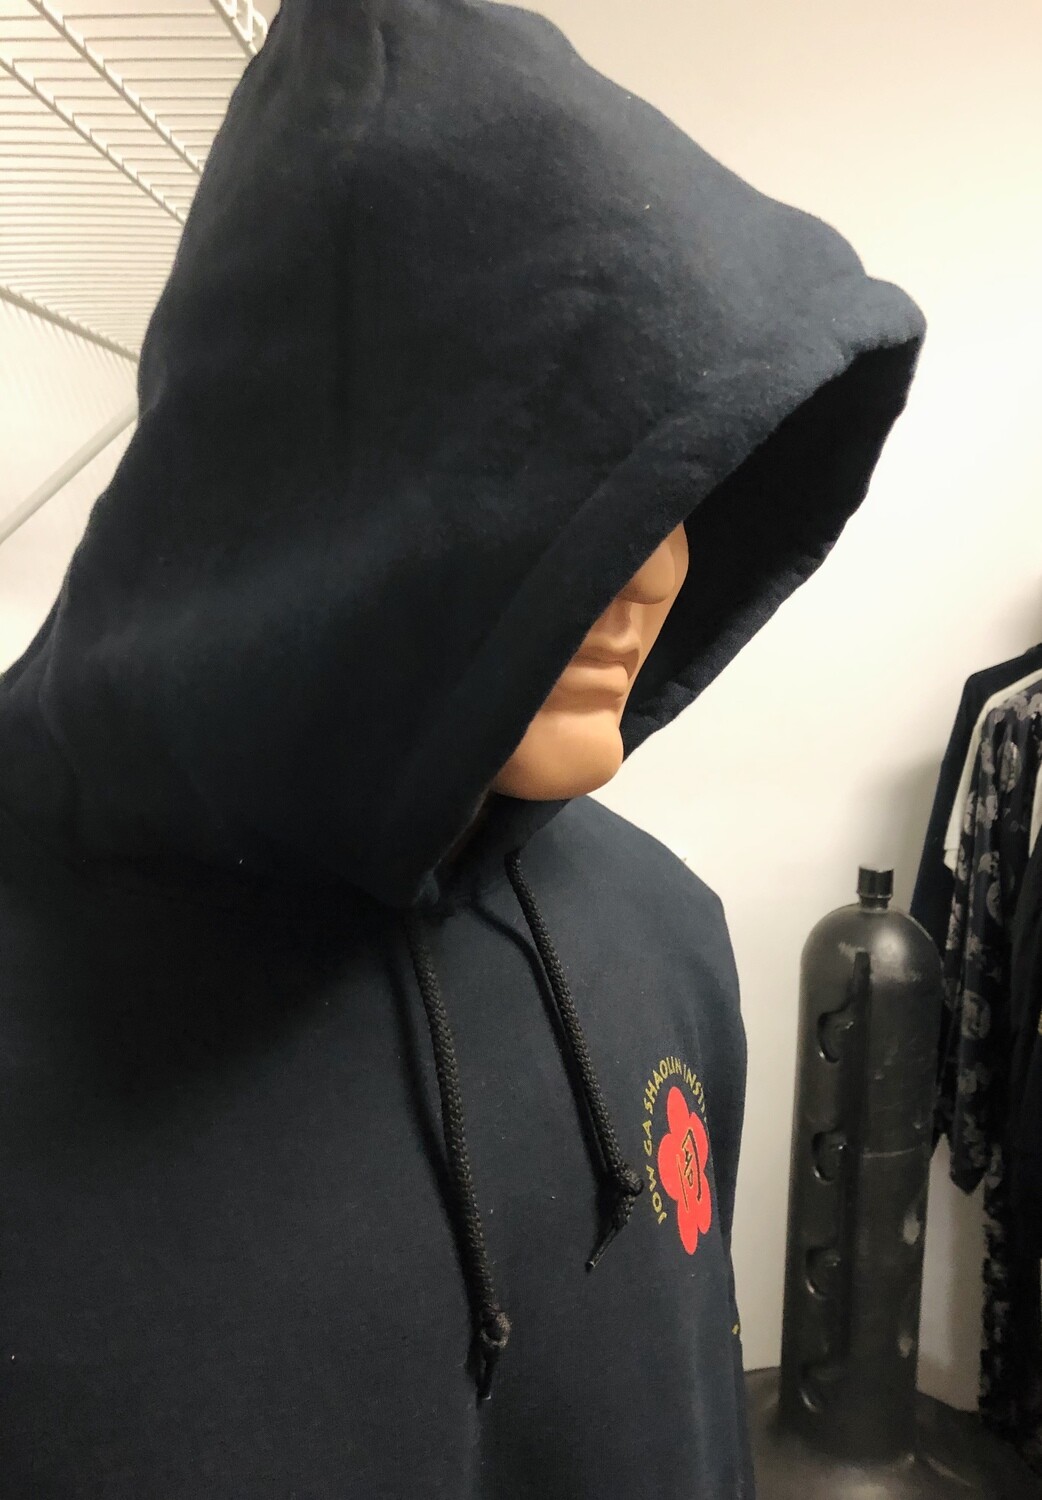 Jow Ga Shaolin Institute Youth Sized Hoodie Sweatshirt